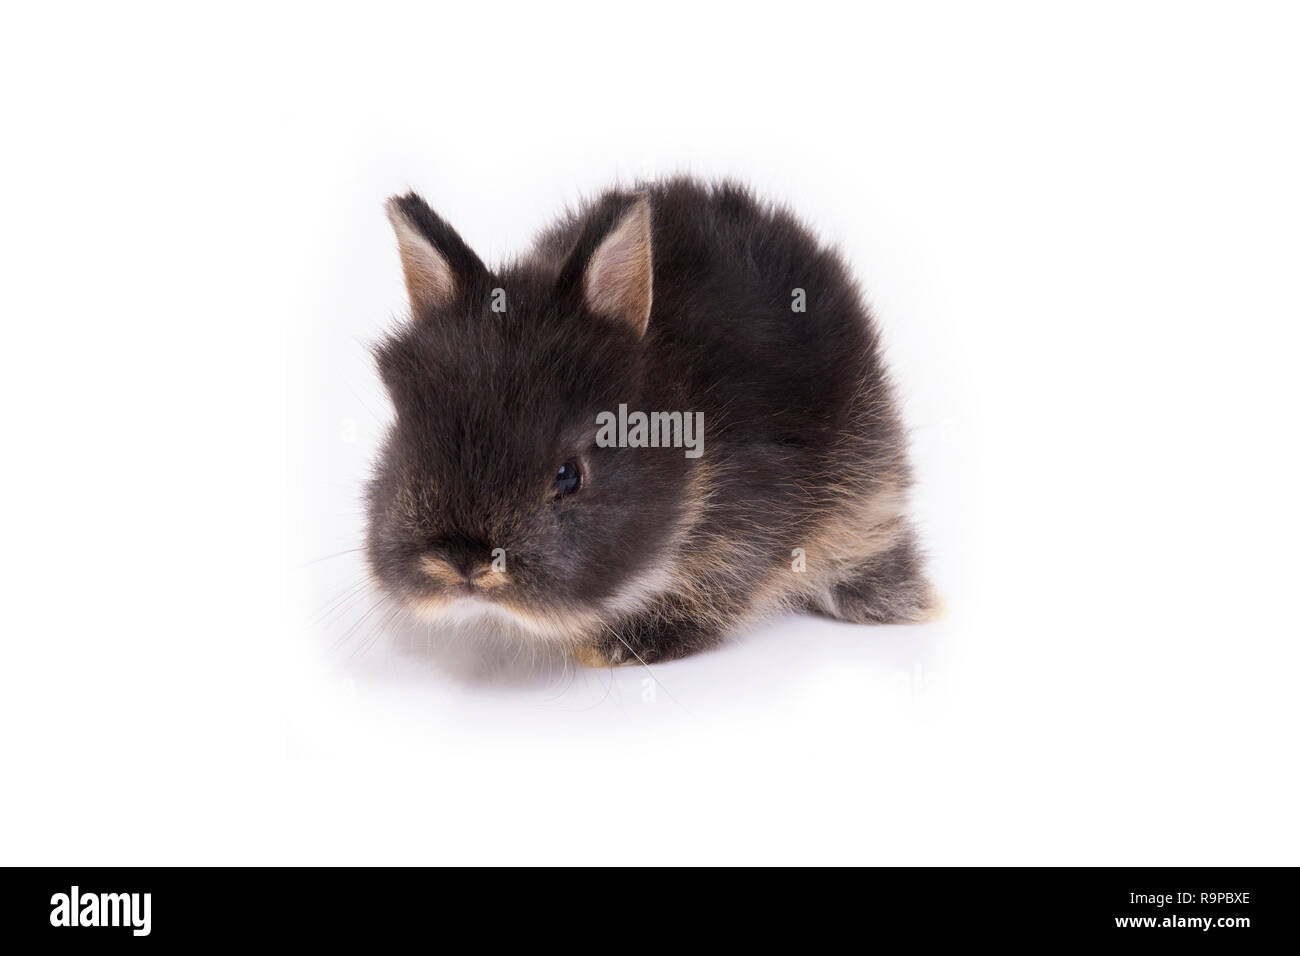 Baby netherland dwarf rabbit on white background. Stock Photo